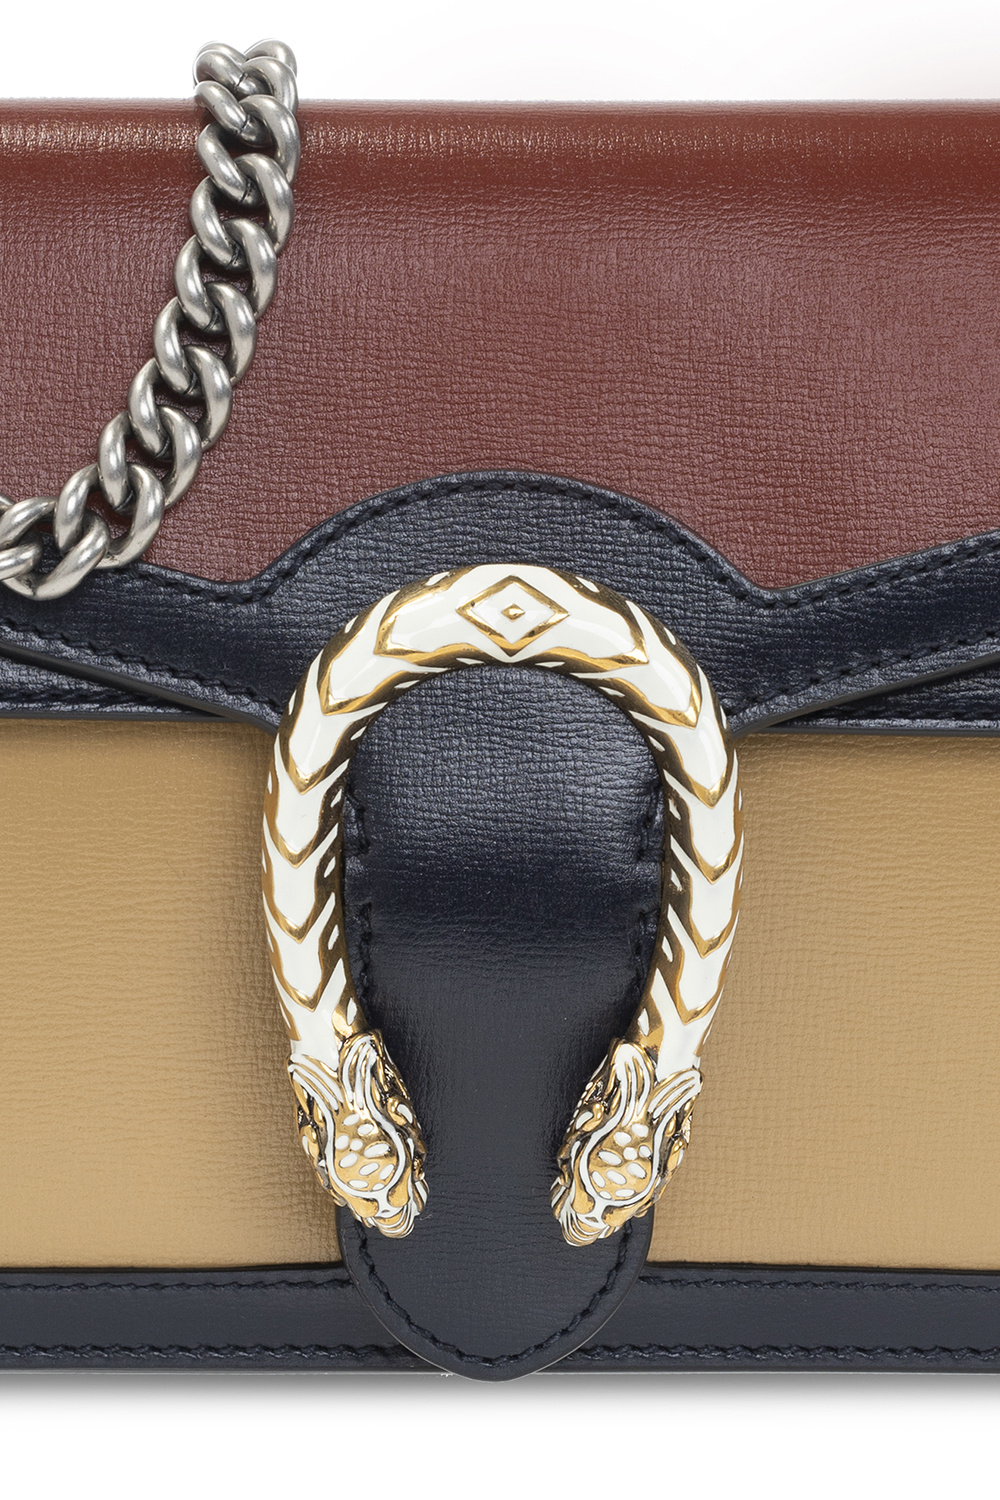 Gucci Dionysus Small GG Supreme Shoulder Bag 28cm